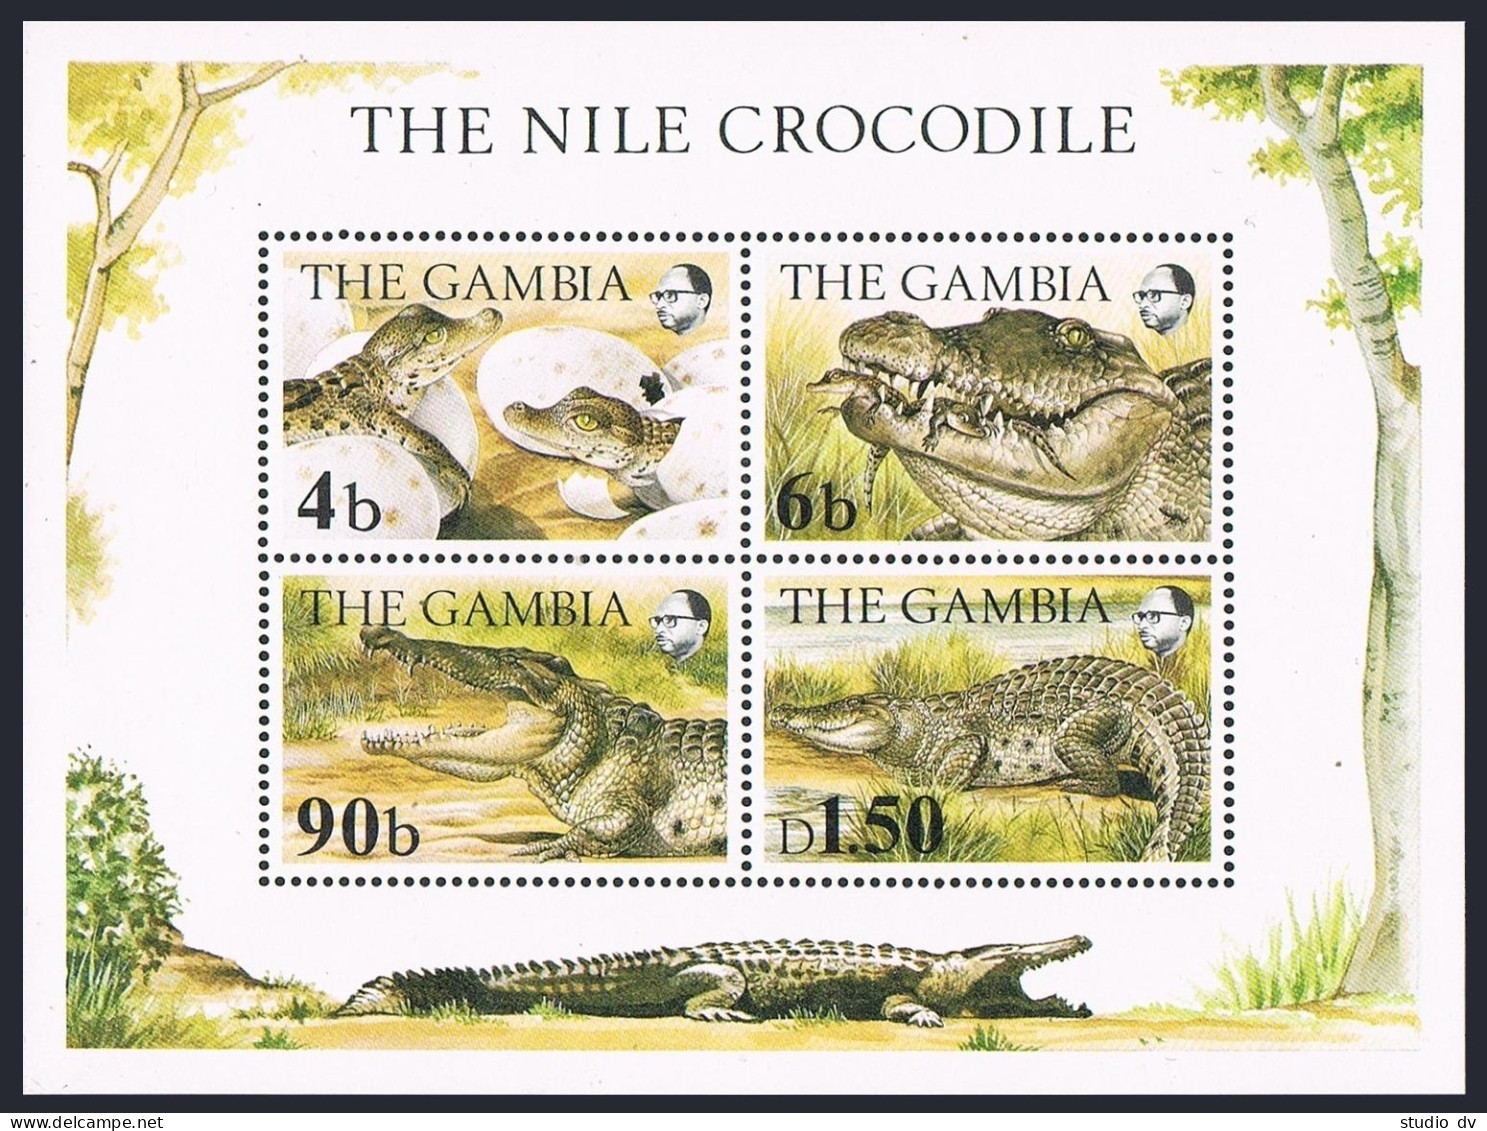 Gambia 515-518, 518A, MNH. Mi 517-520, 521-524 Bl.10. WWF 1984. Nile Crocodile. - Gambia (1965-...)